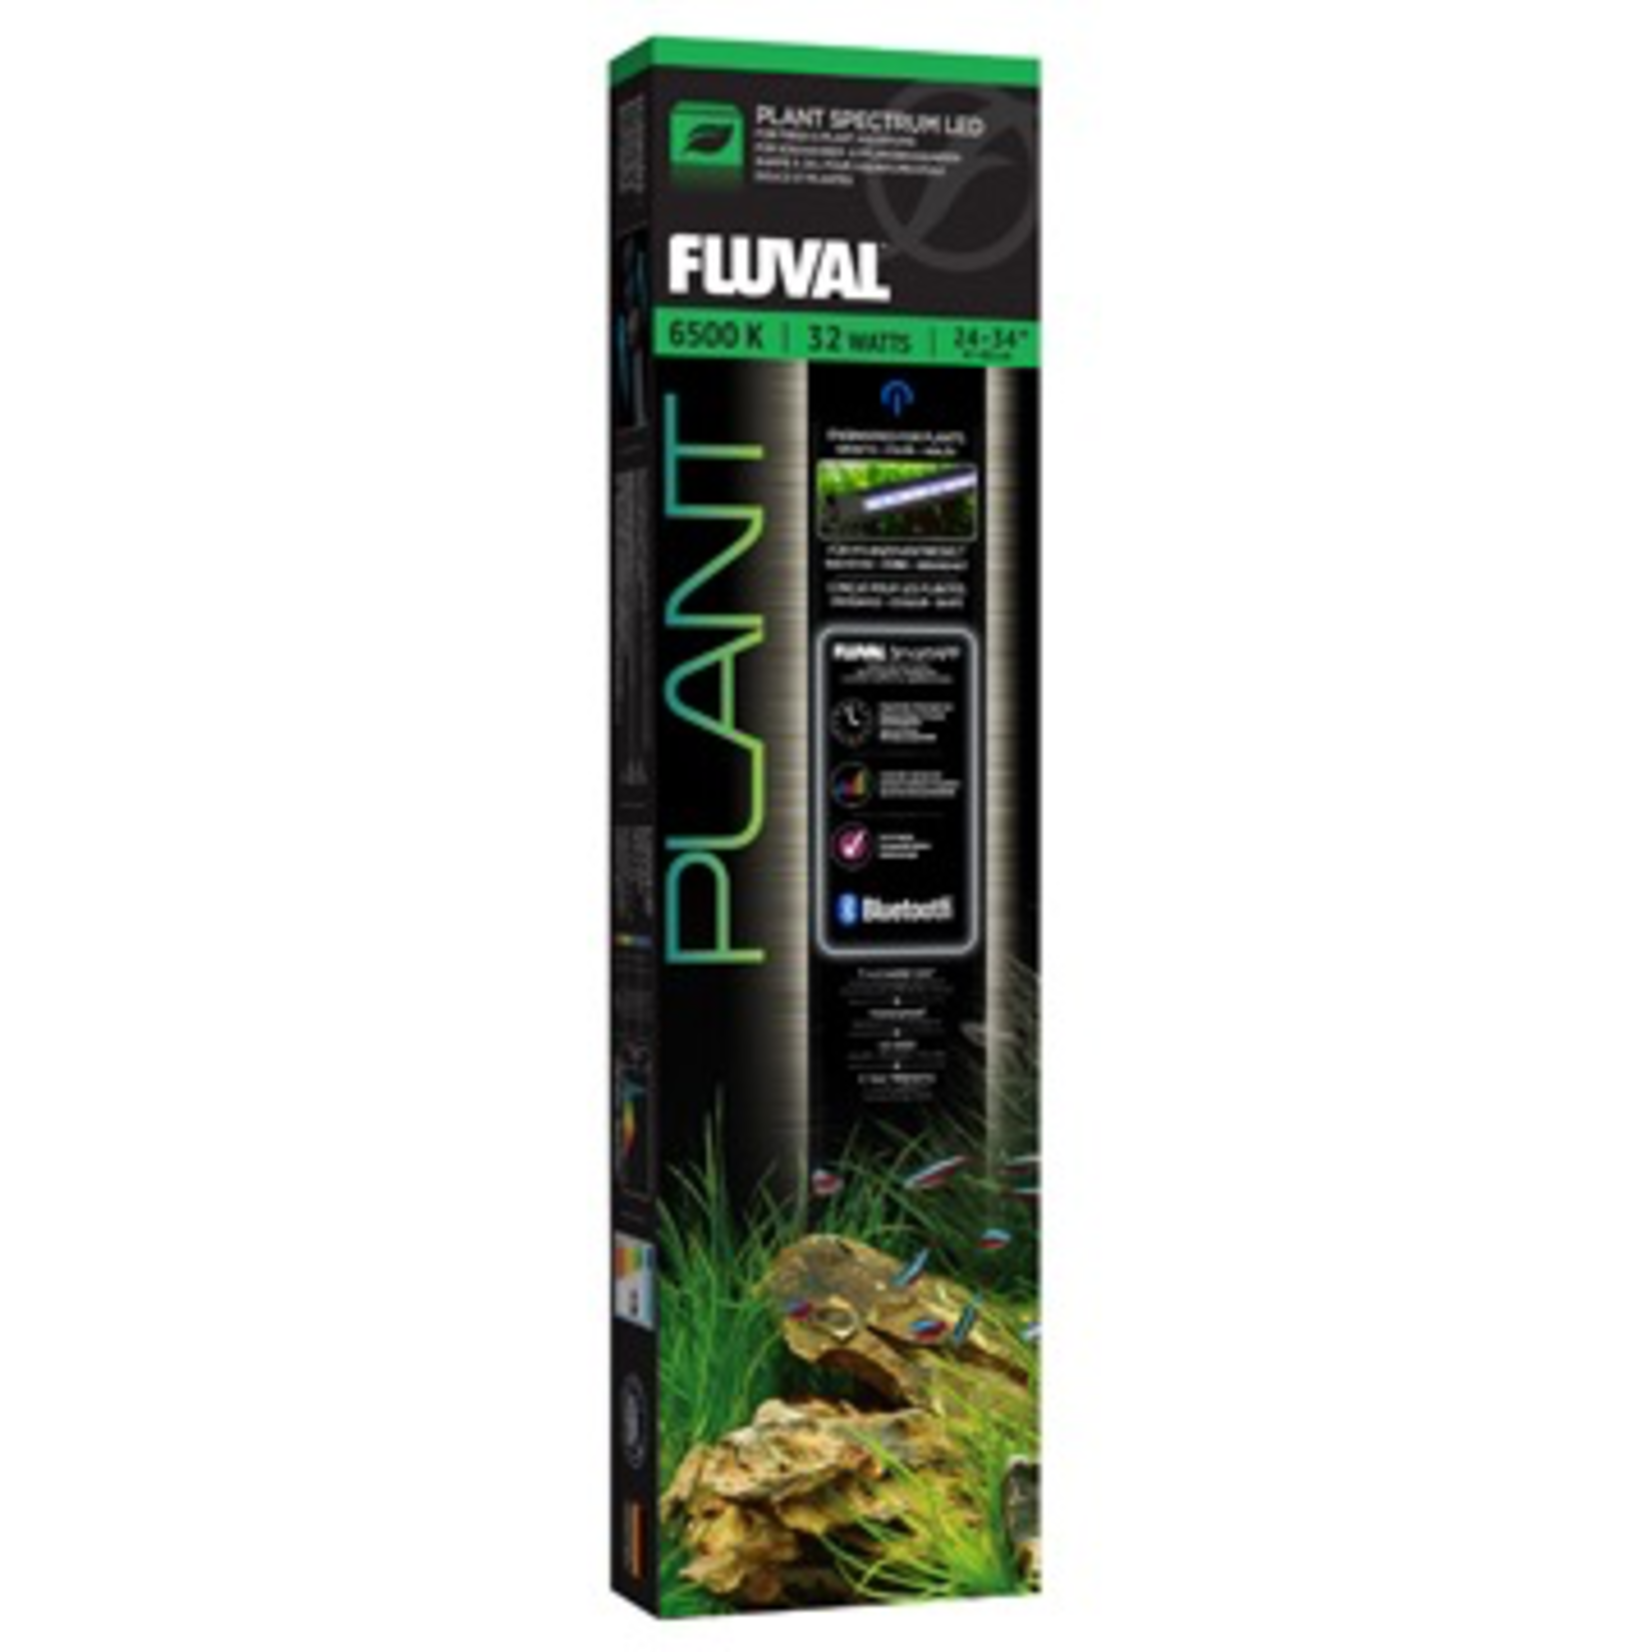 FLUVAL (W) Fluval Plant Spectrum LED with Bluetooth - 32 W - 61-85 cm (24"-34")